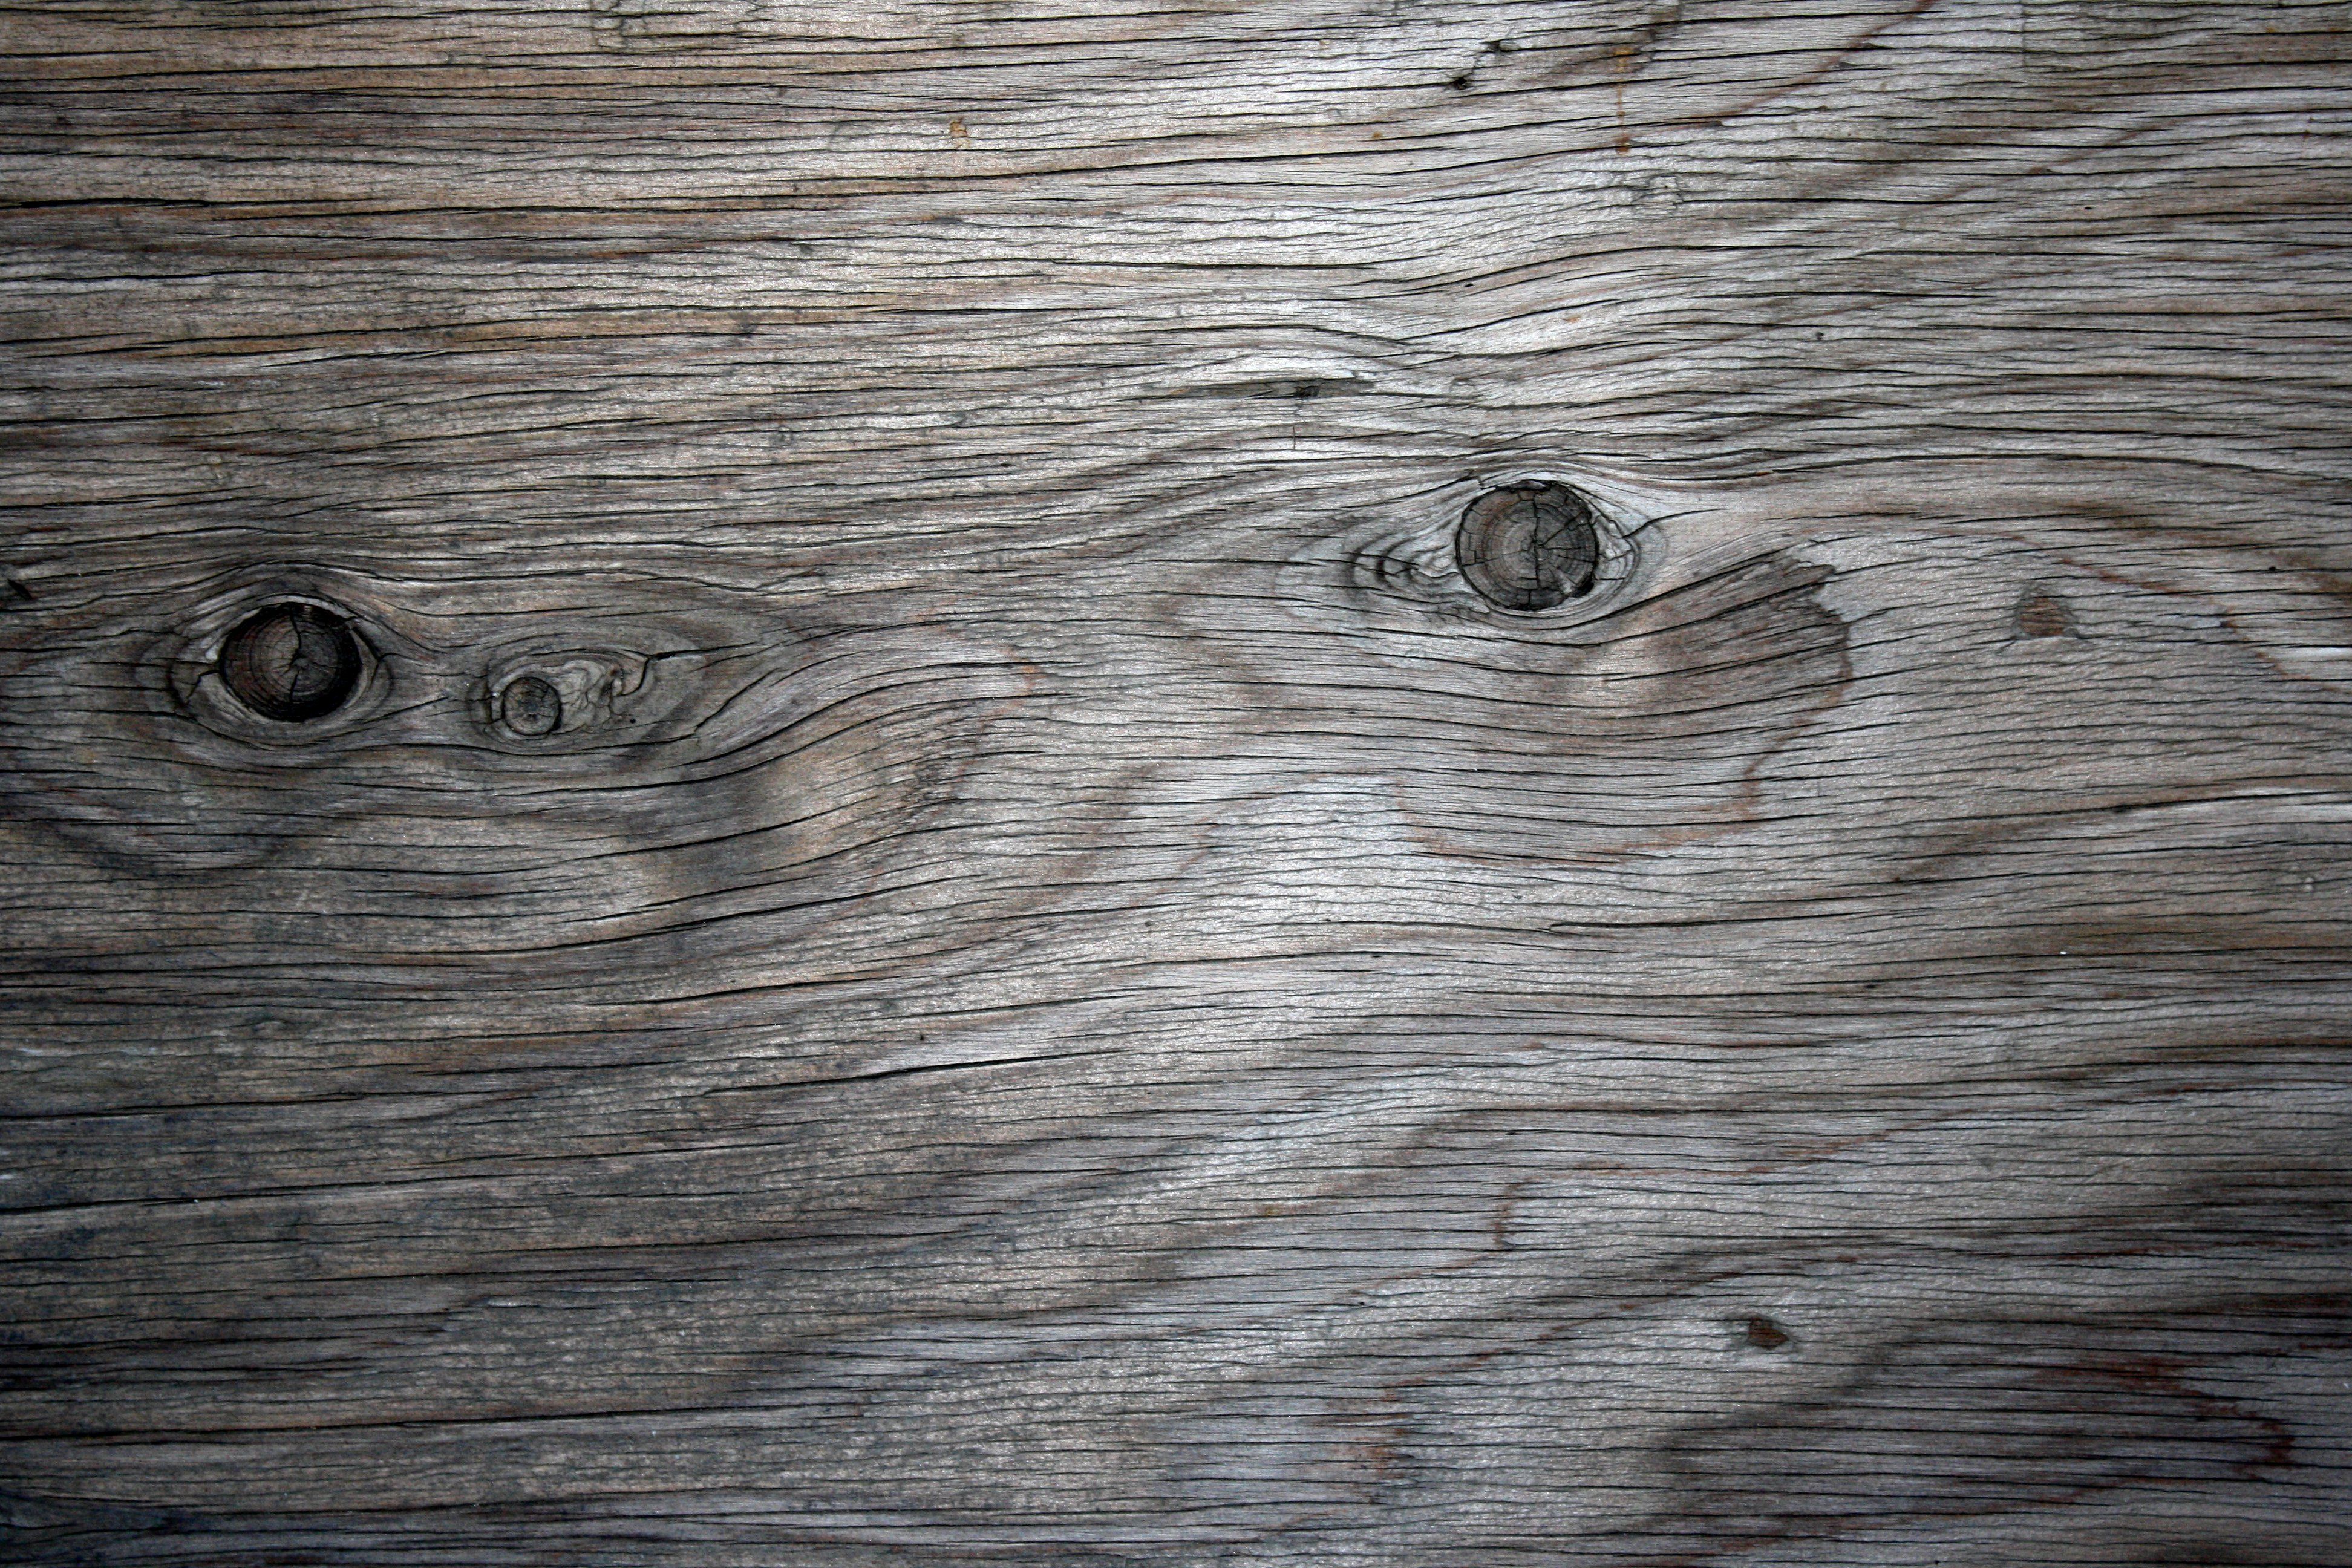 Weathered Wood Grain Texture - Free High Resolution Photo | Brand ID ...